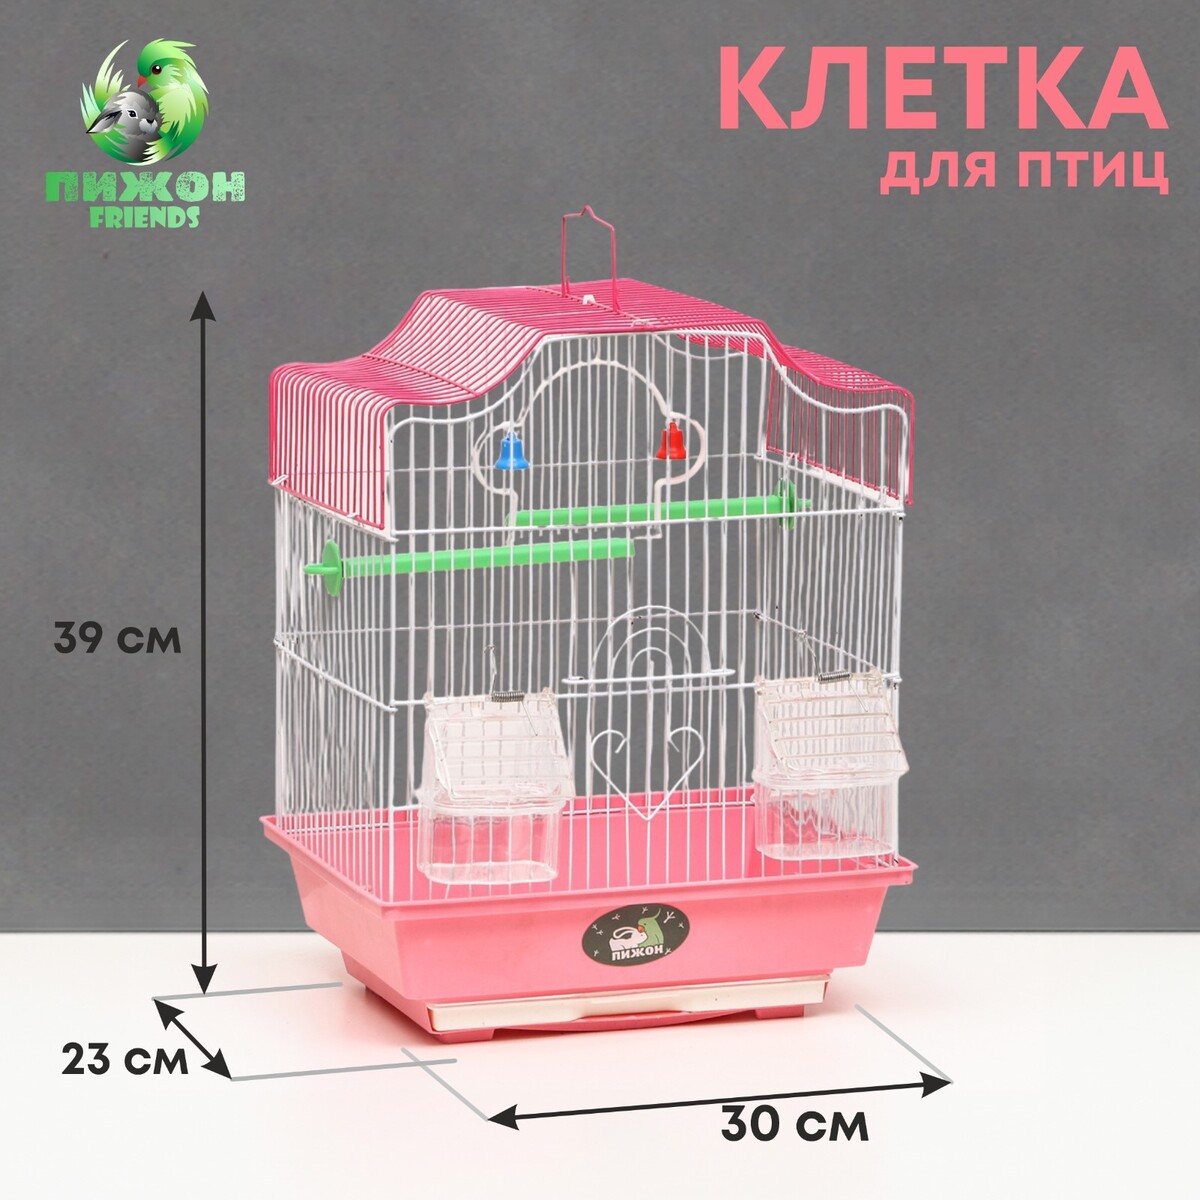 Клетка для птиц укомплектованная bd-1/4f, 30 х 23 х 39 см, розовая